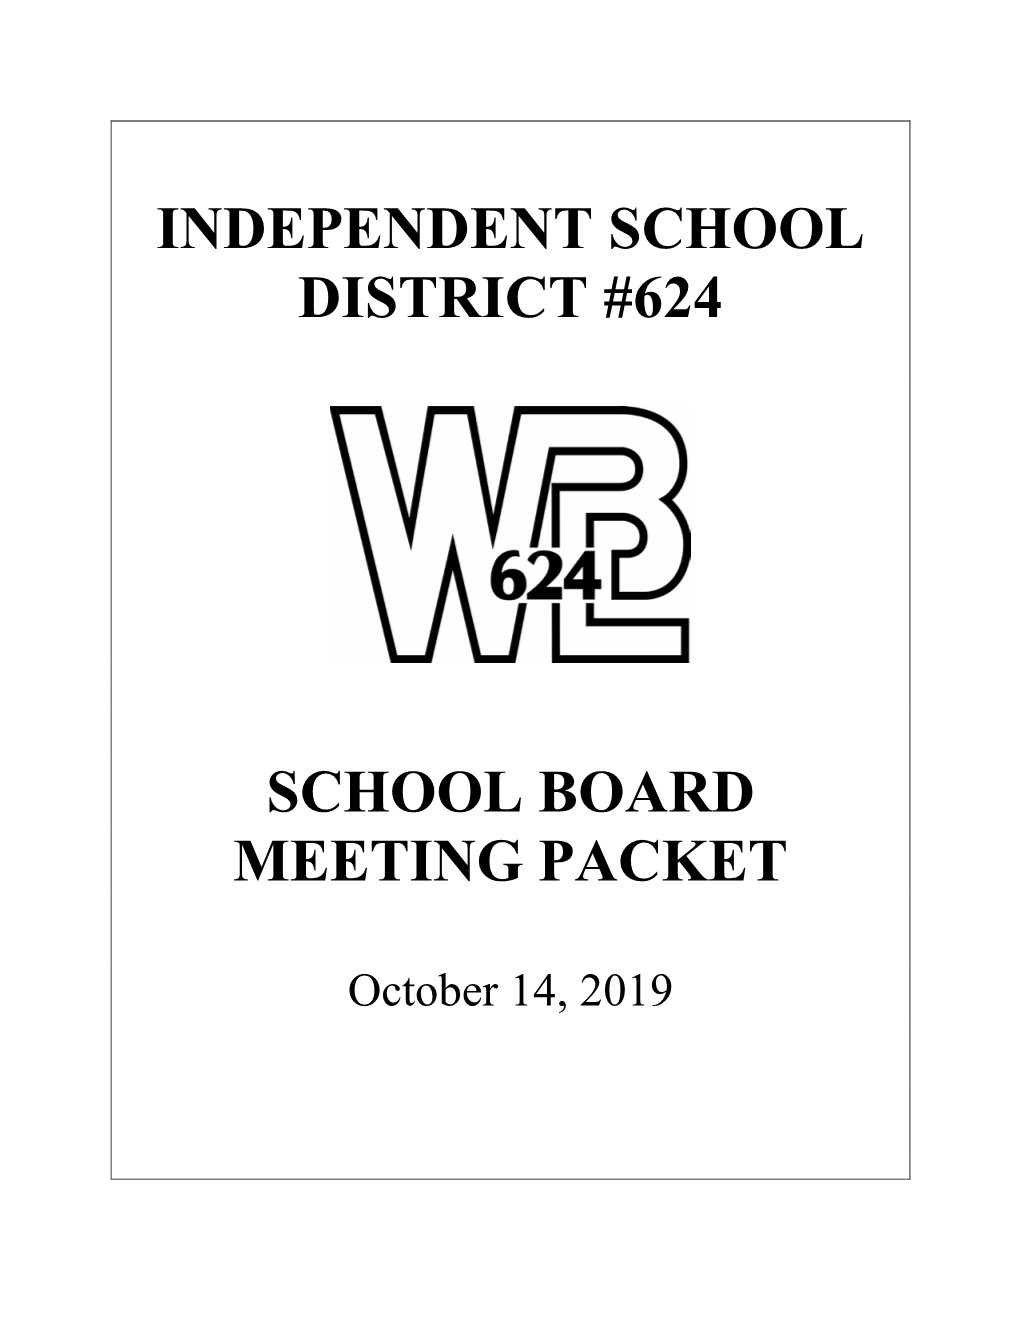 Independent School District #624 School Board Meeting Packet